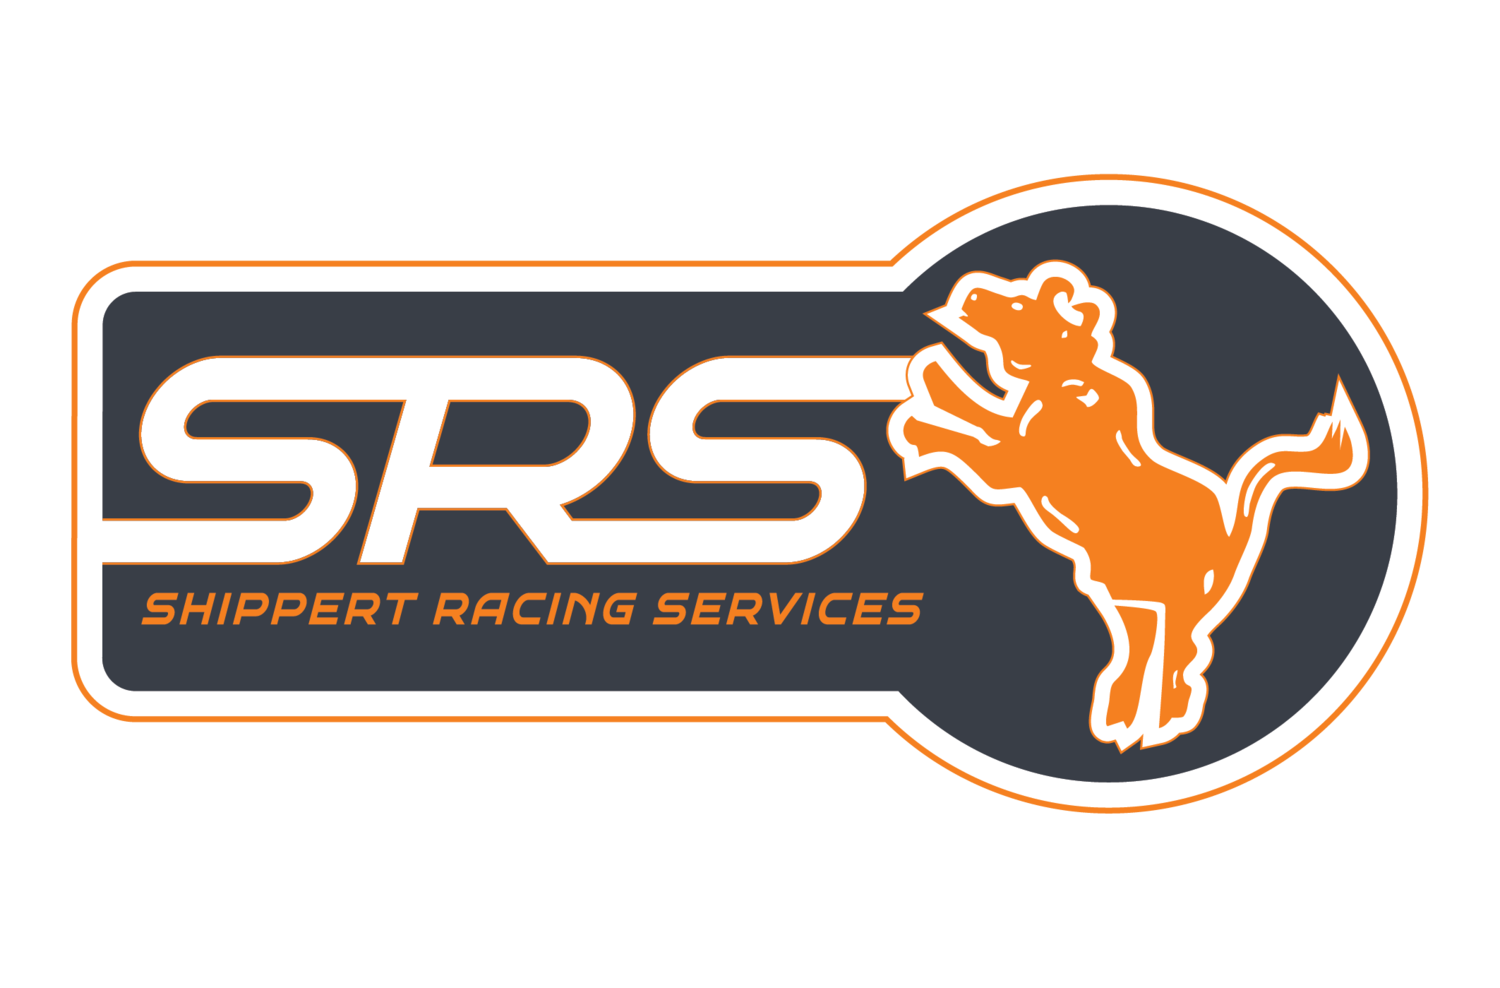 Shippert Racing Services